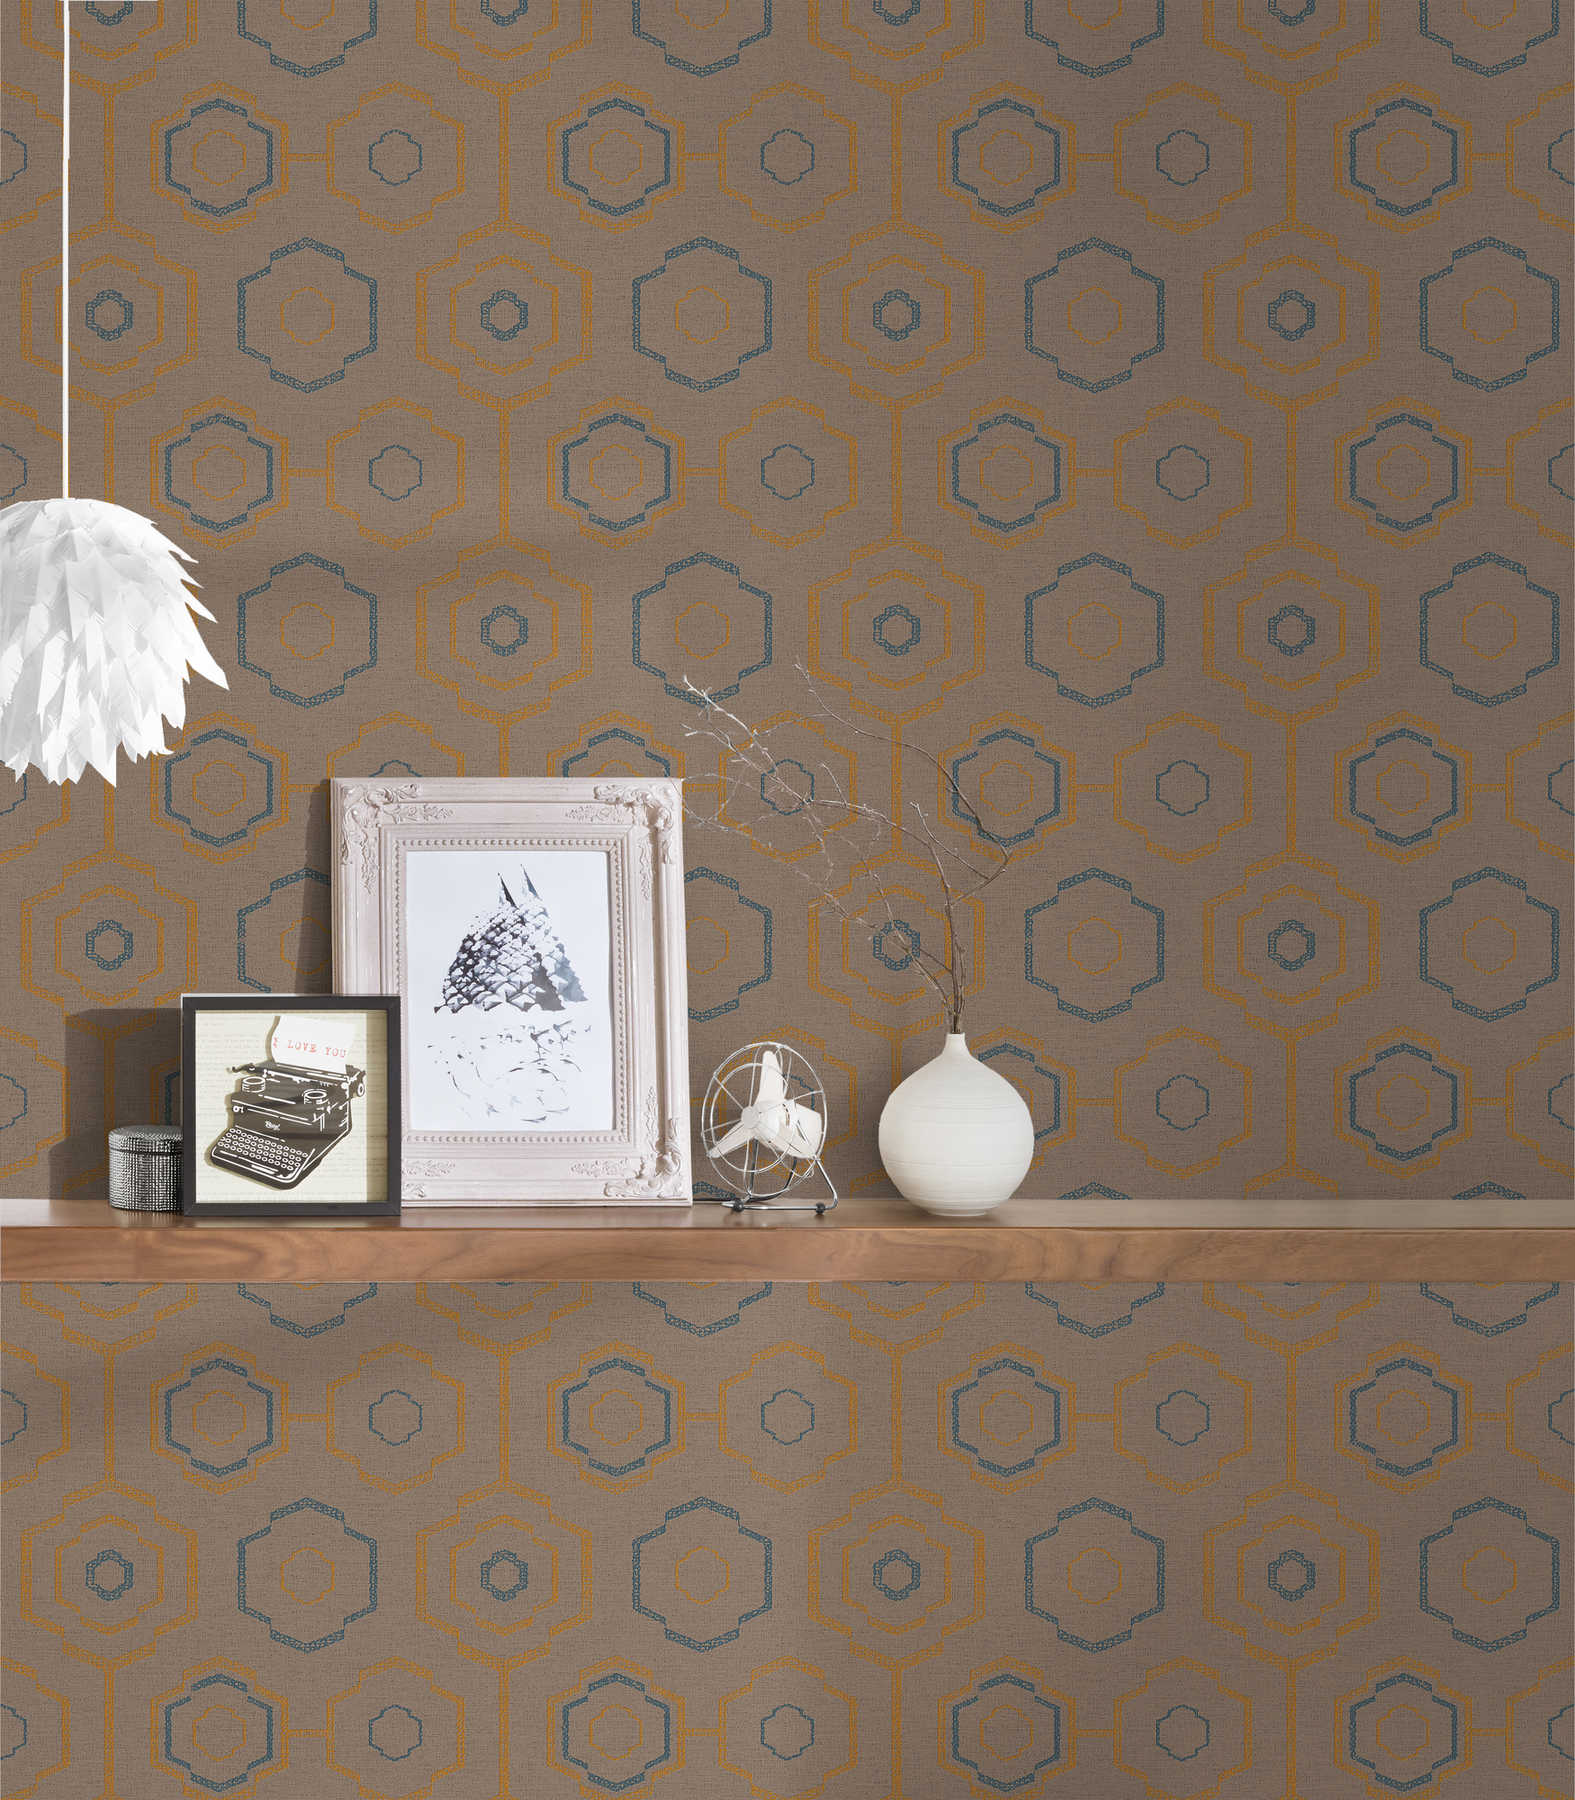             Wallpaper indigenous textile pattern with geometric design - brown, blue, orange
        